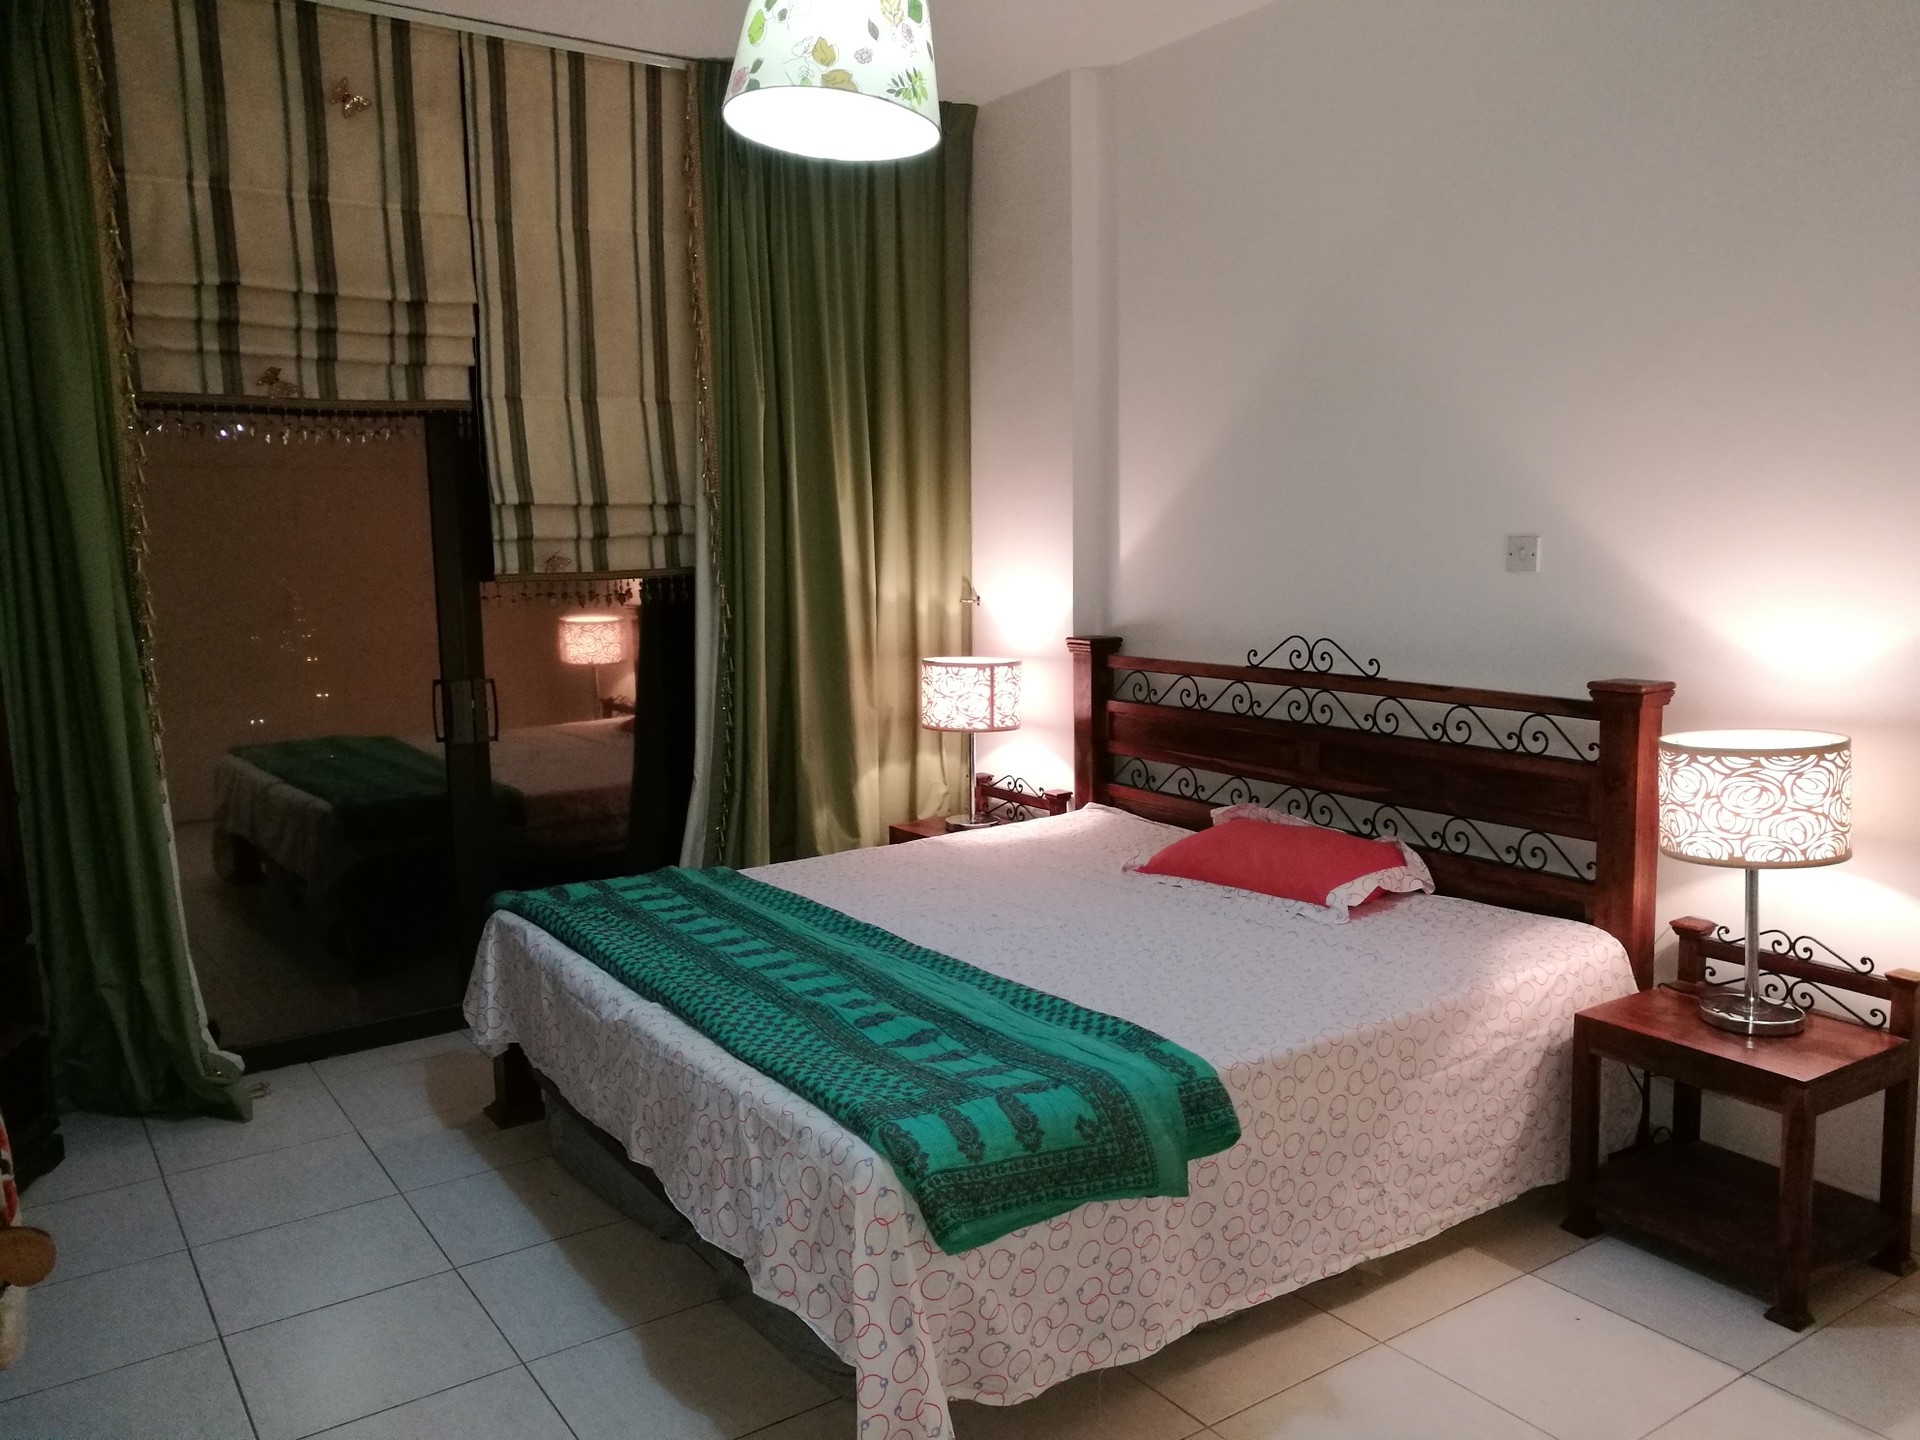 2 bed apartment for rent in dubai